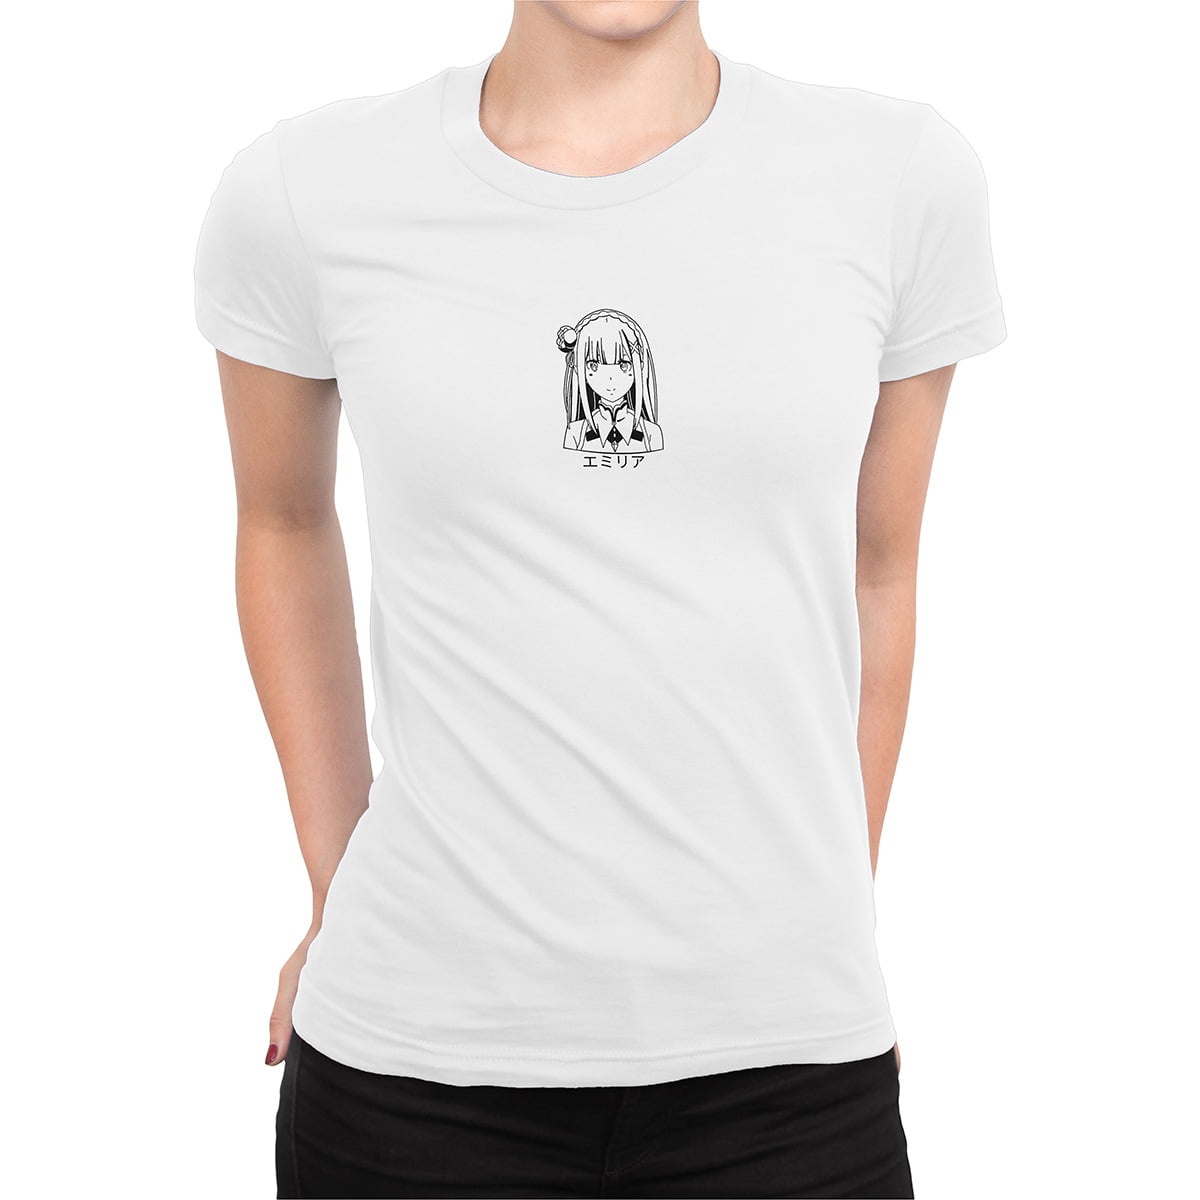 Rezero emilia siyah fxsca2114c kadin tshirt beyaz orta kucuk - re:zero emilia kadın t-shirt - figurex